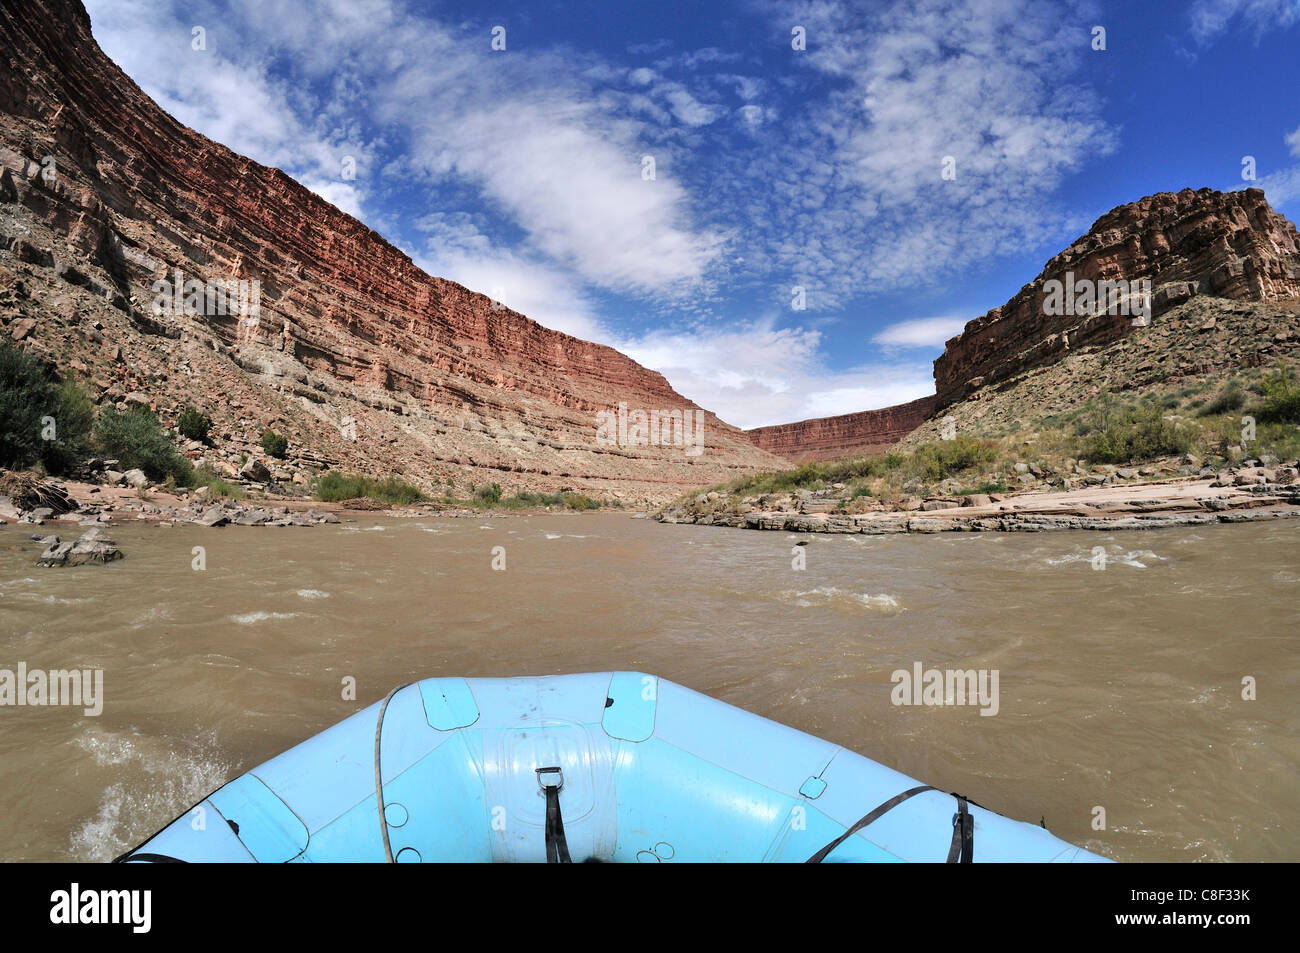 San Juan River in der Nähe von Bluff, Fluss, Landschaft, Boot, Colorado Plateau, Utah, USA, USA, Amerika, rafting, Kautschuk Stockfoto